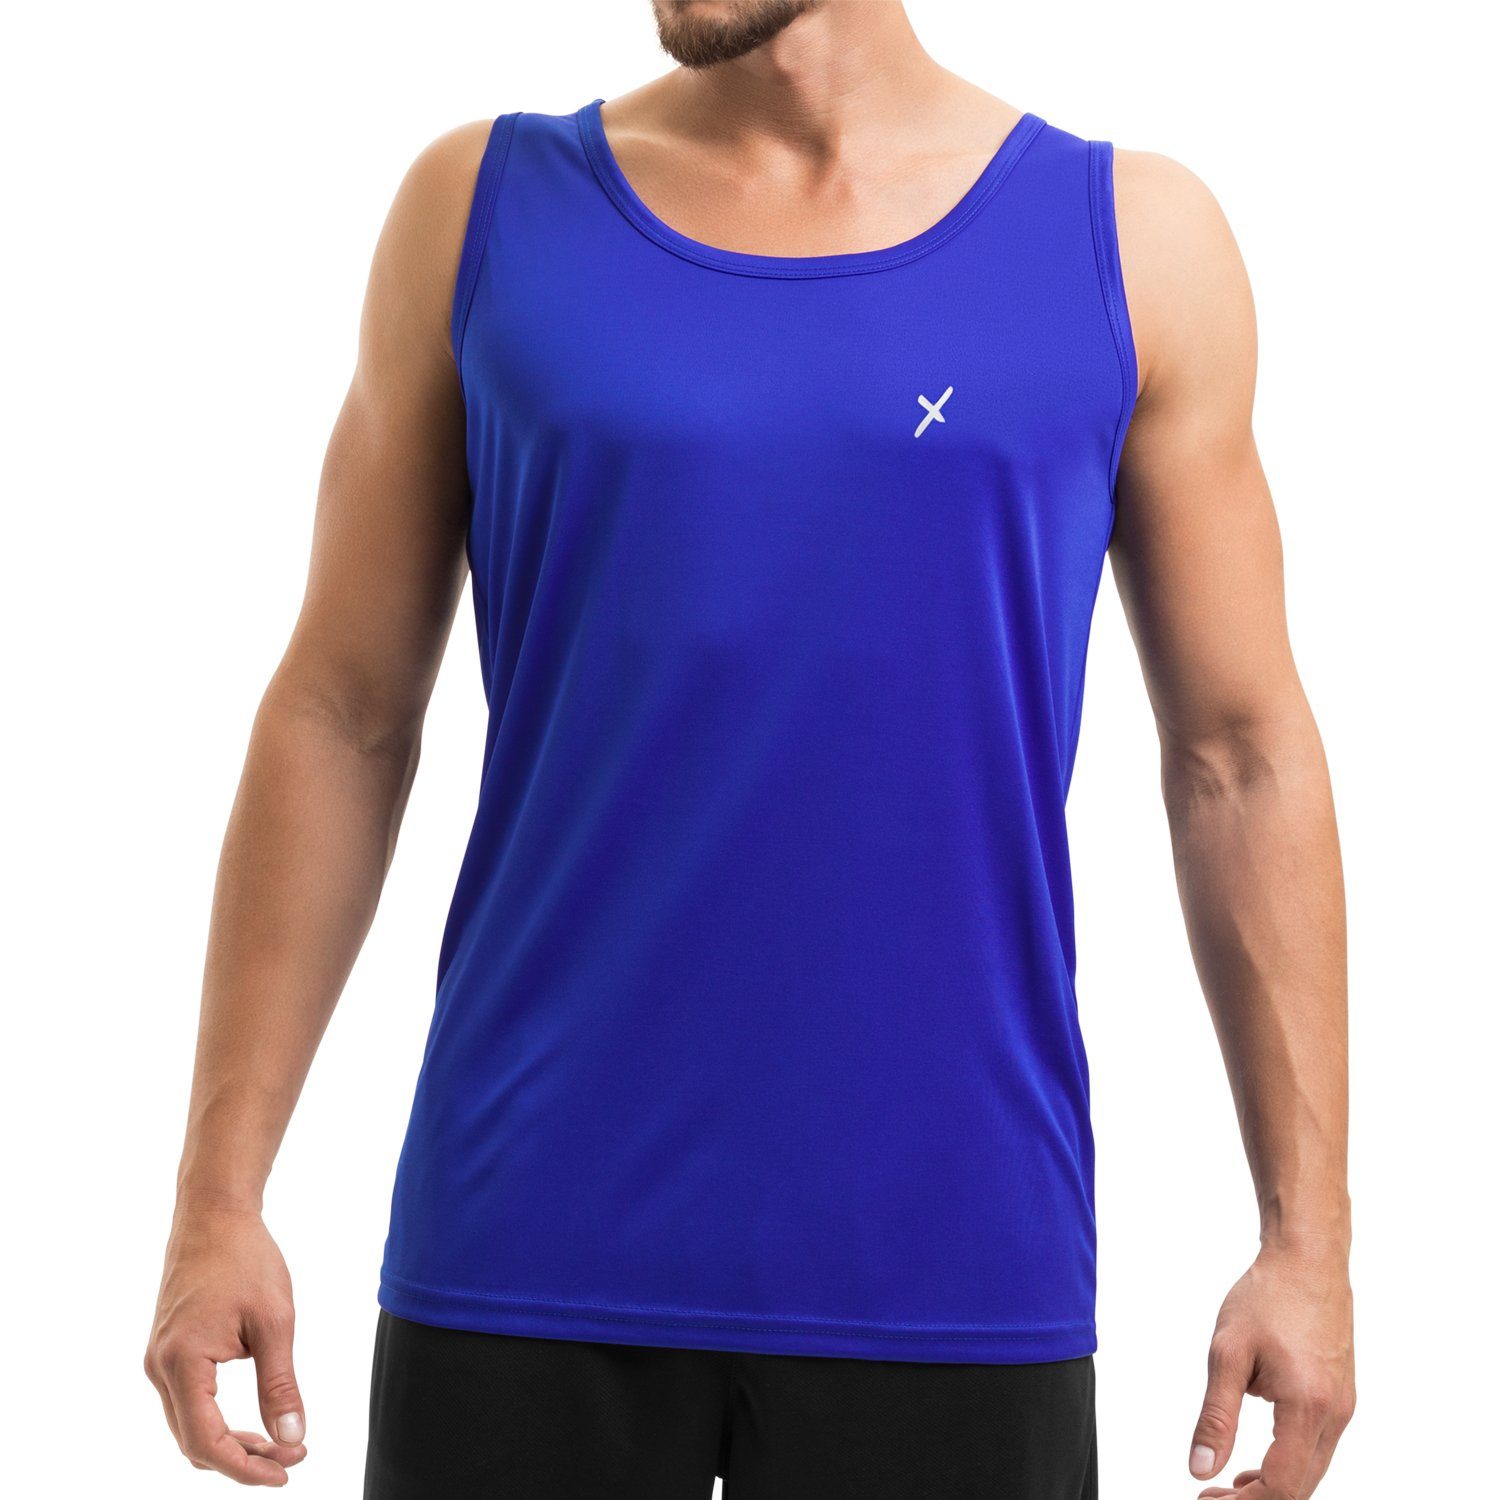 CFLEX Trainingsshirt Herren Sport Shirt Fitness Tanktop Sportswear Collection Royalblau